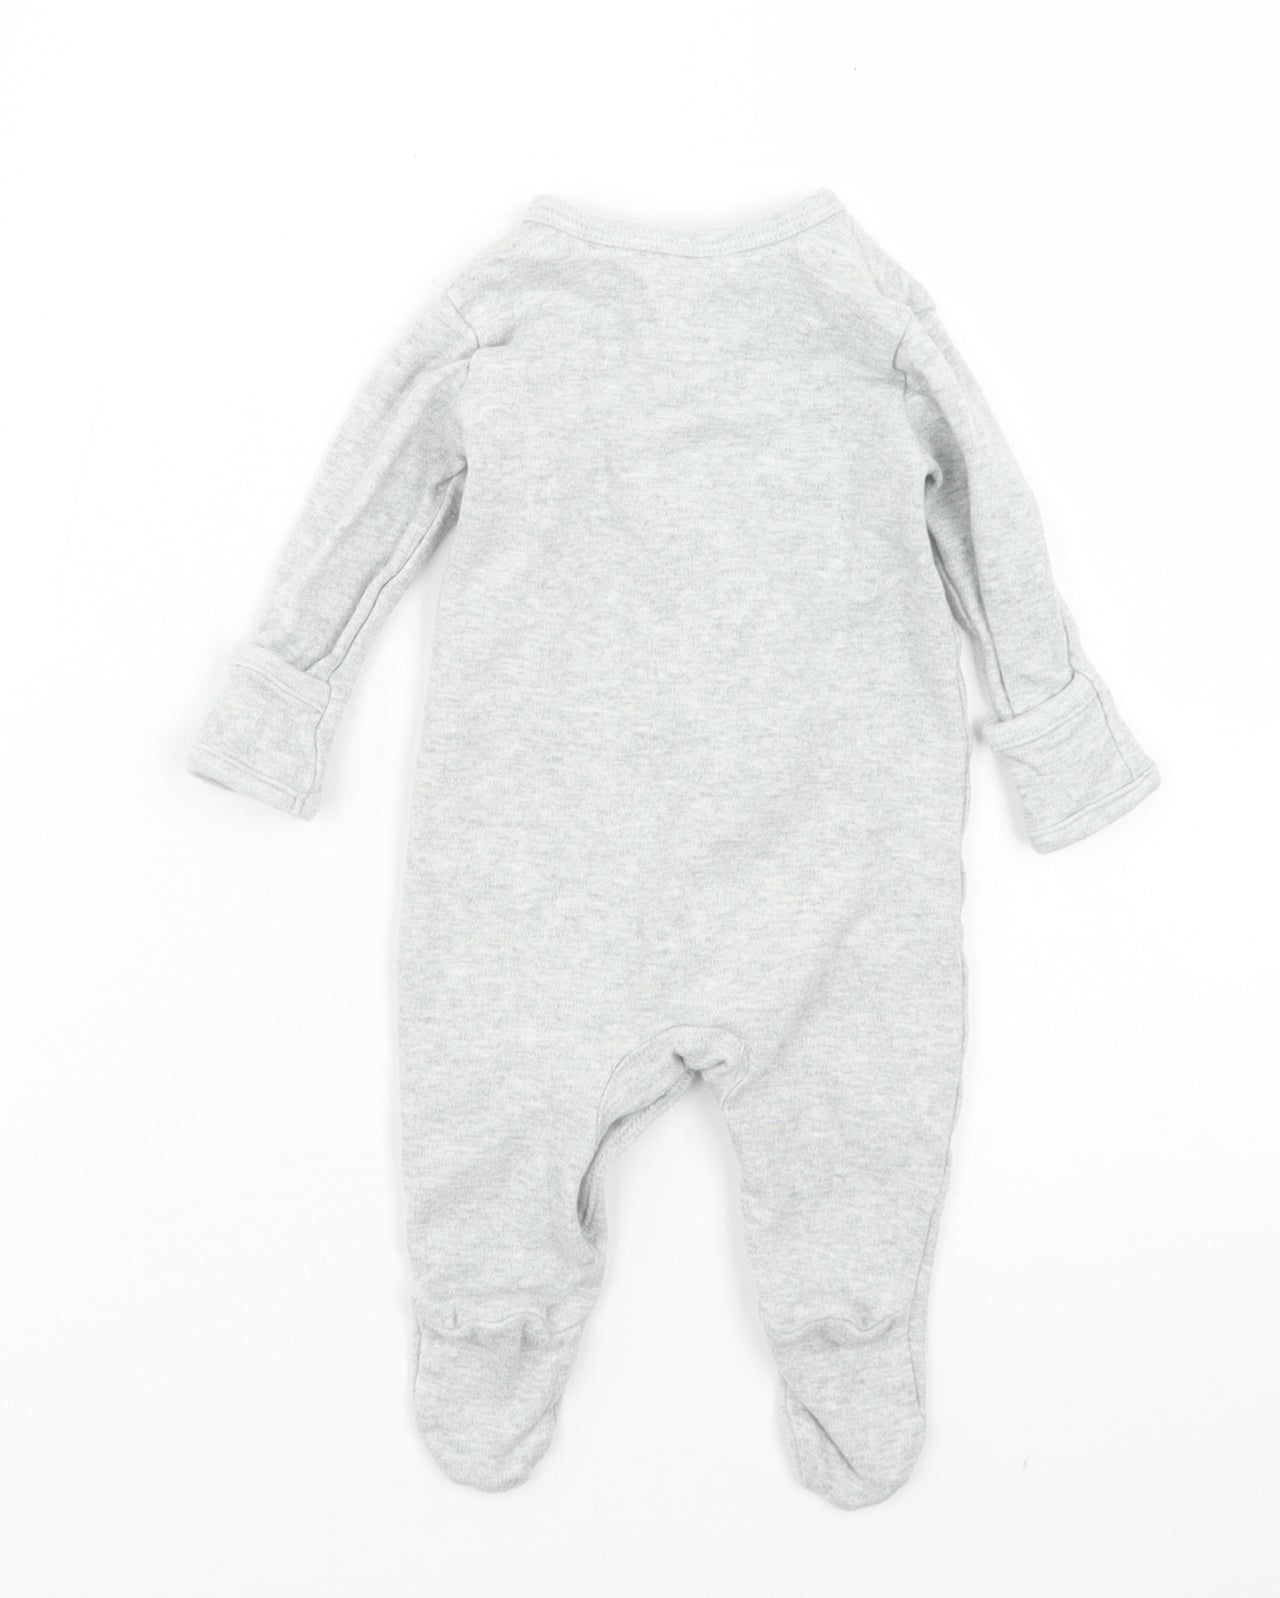 mamas & papas Girls Grey  Cotton Babygrow One-Piece Size 0-3 Months  Snap - Dinosaur